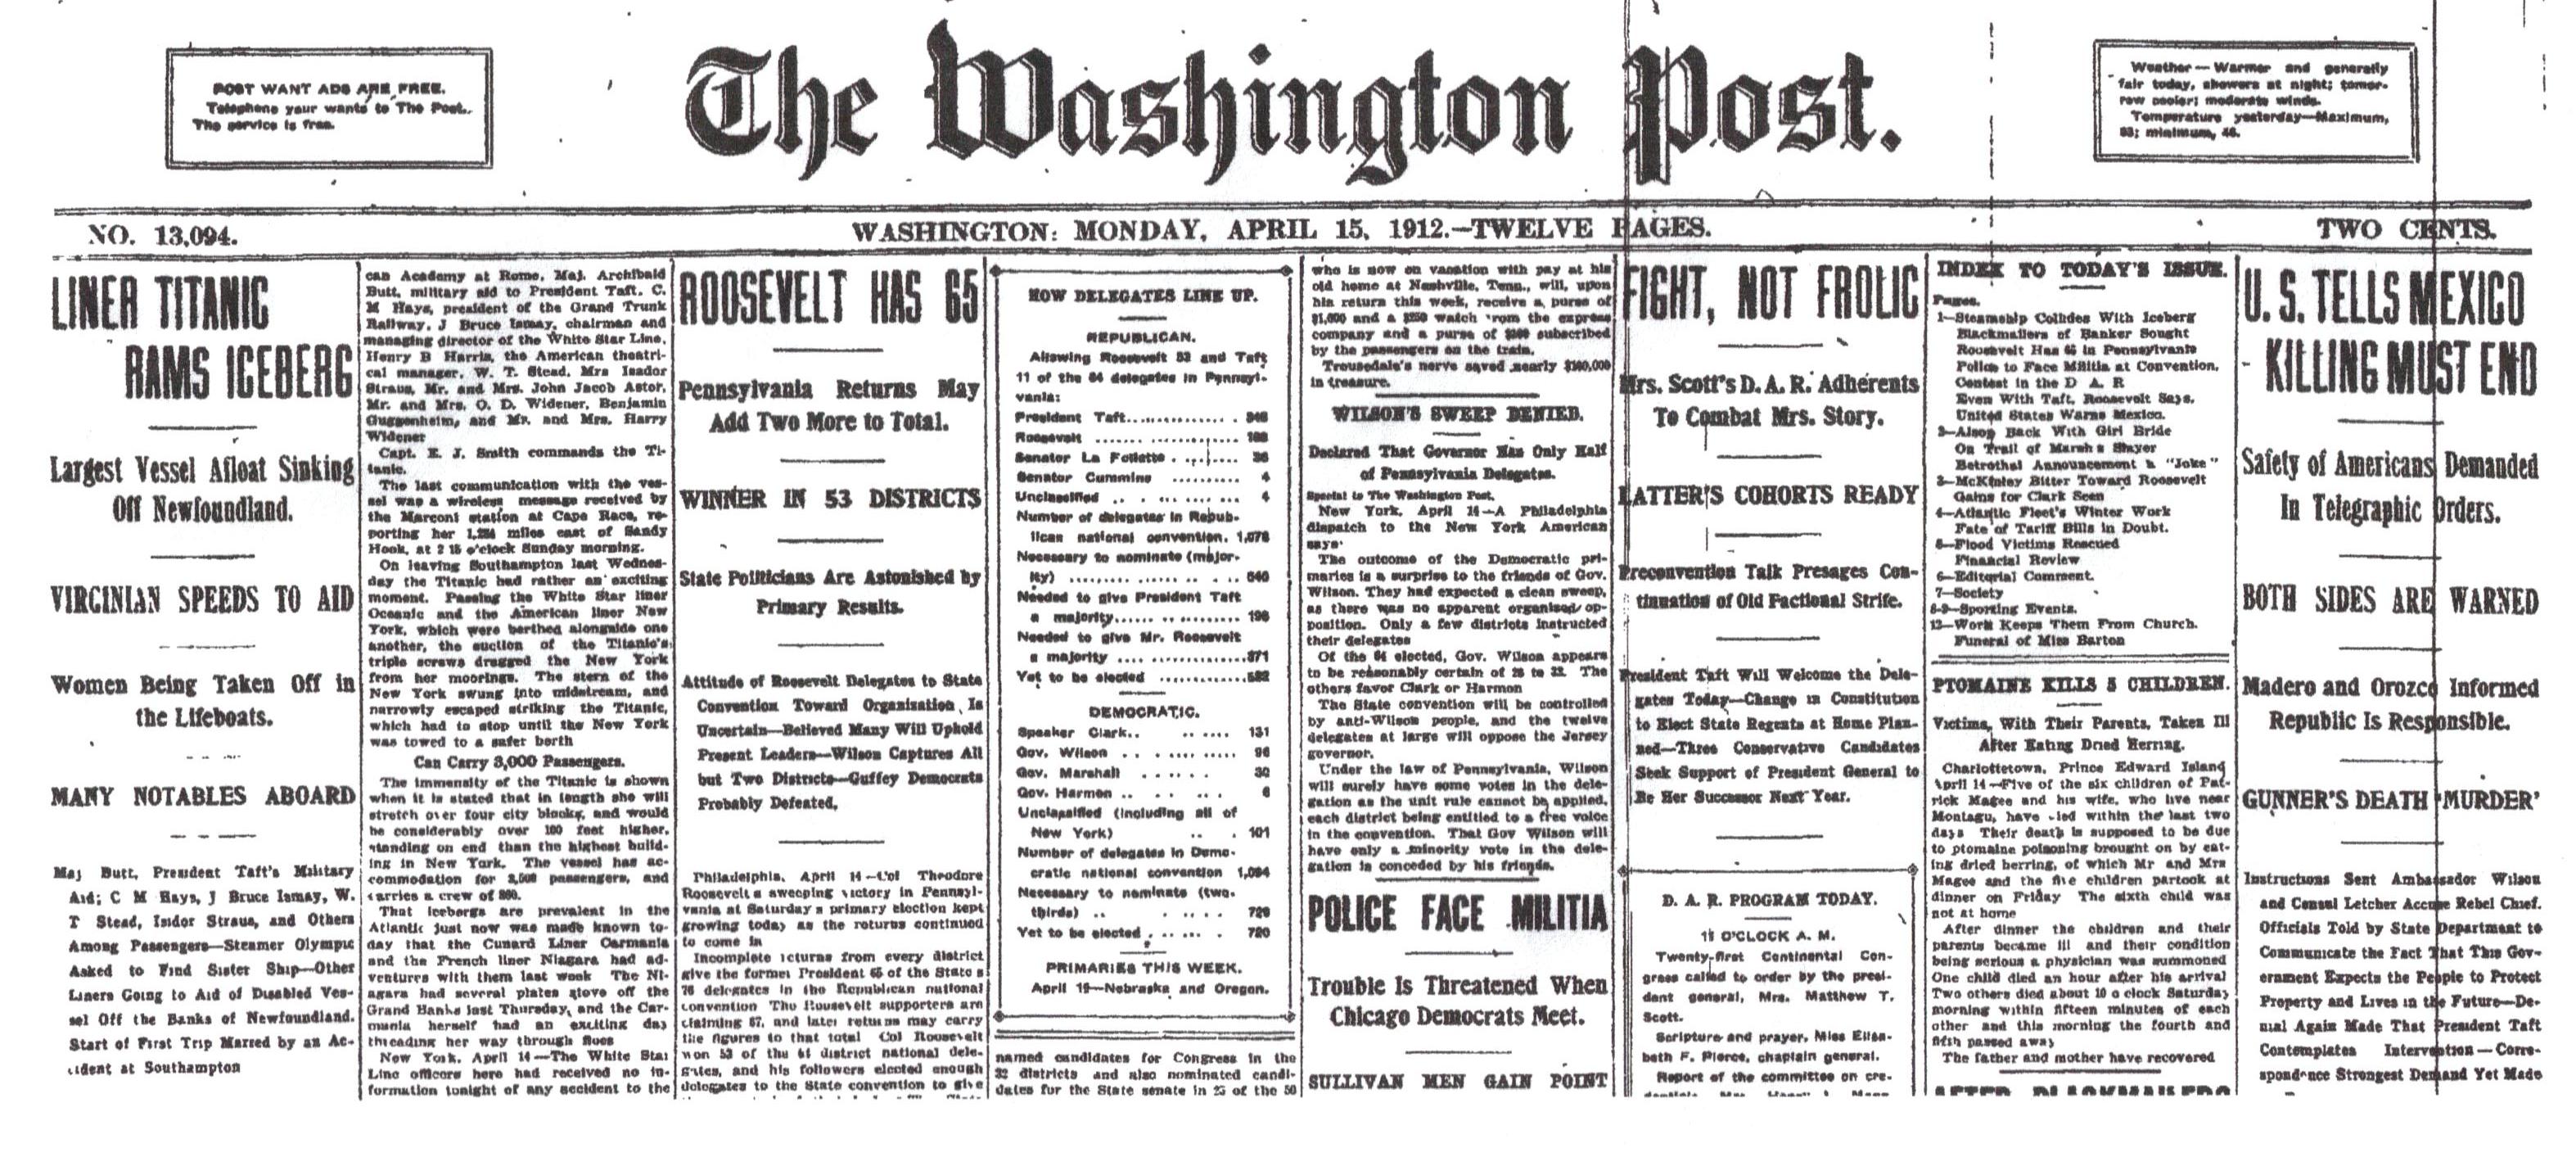 Washington Post, April 15, 1912. 